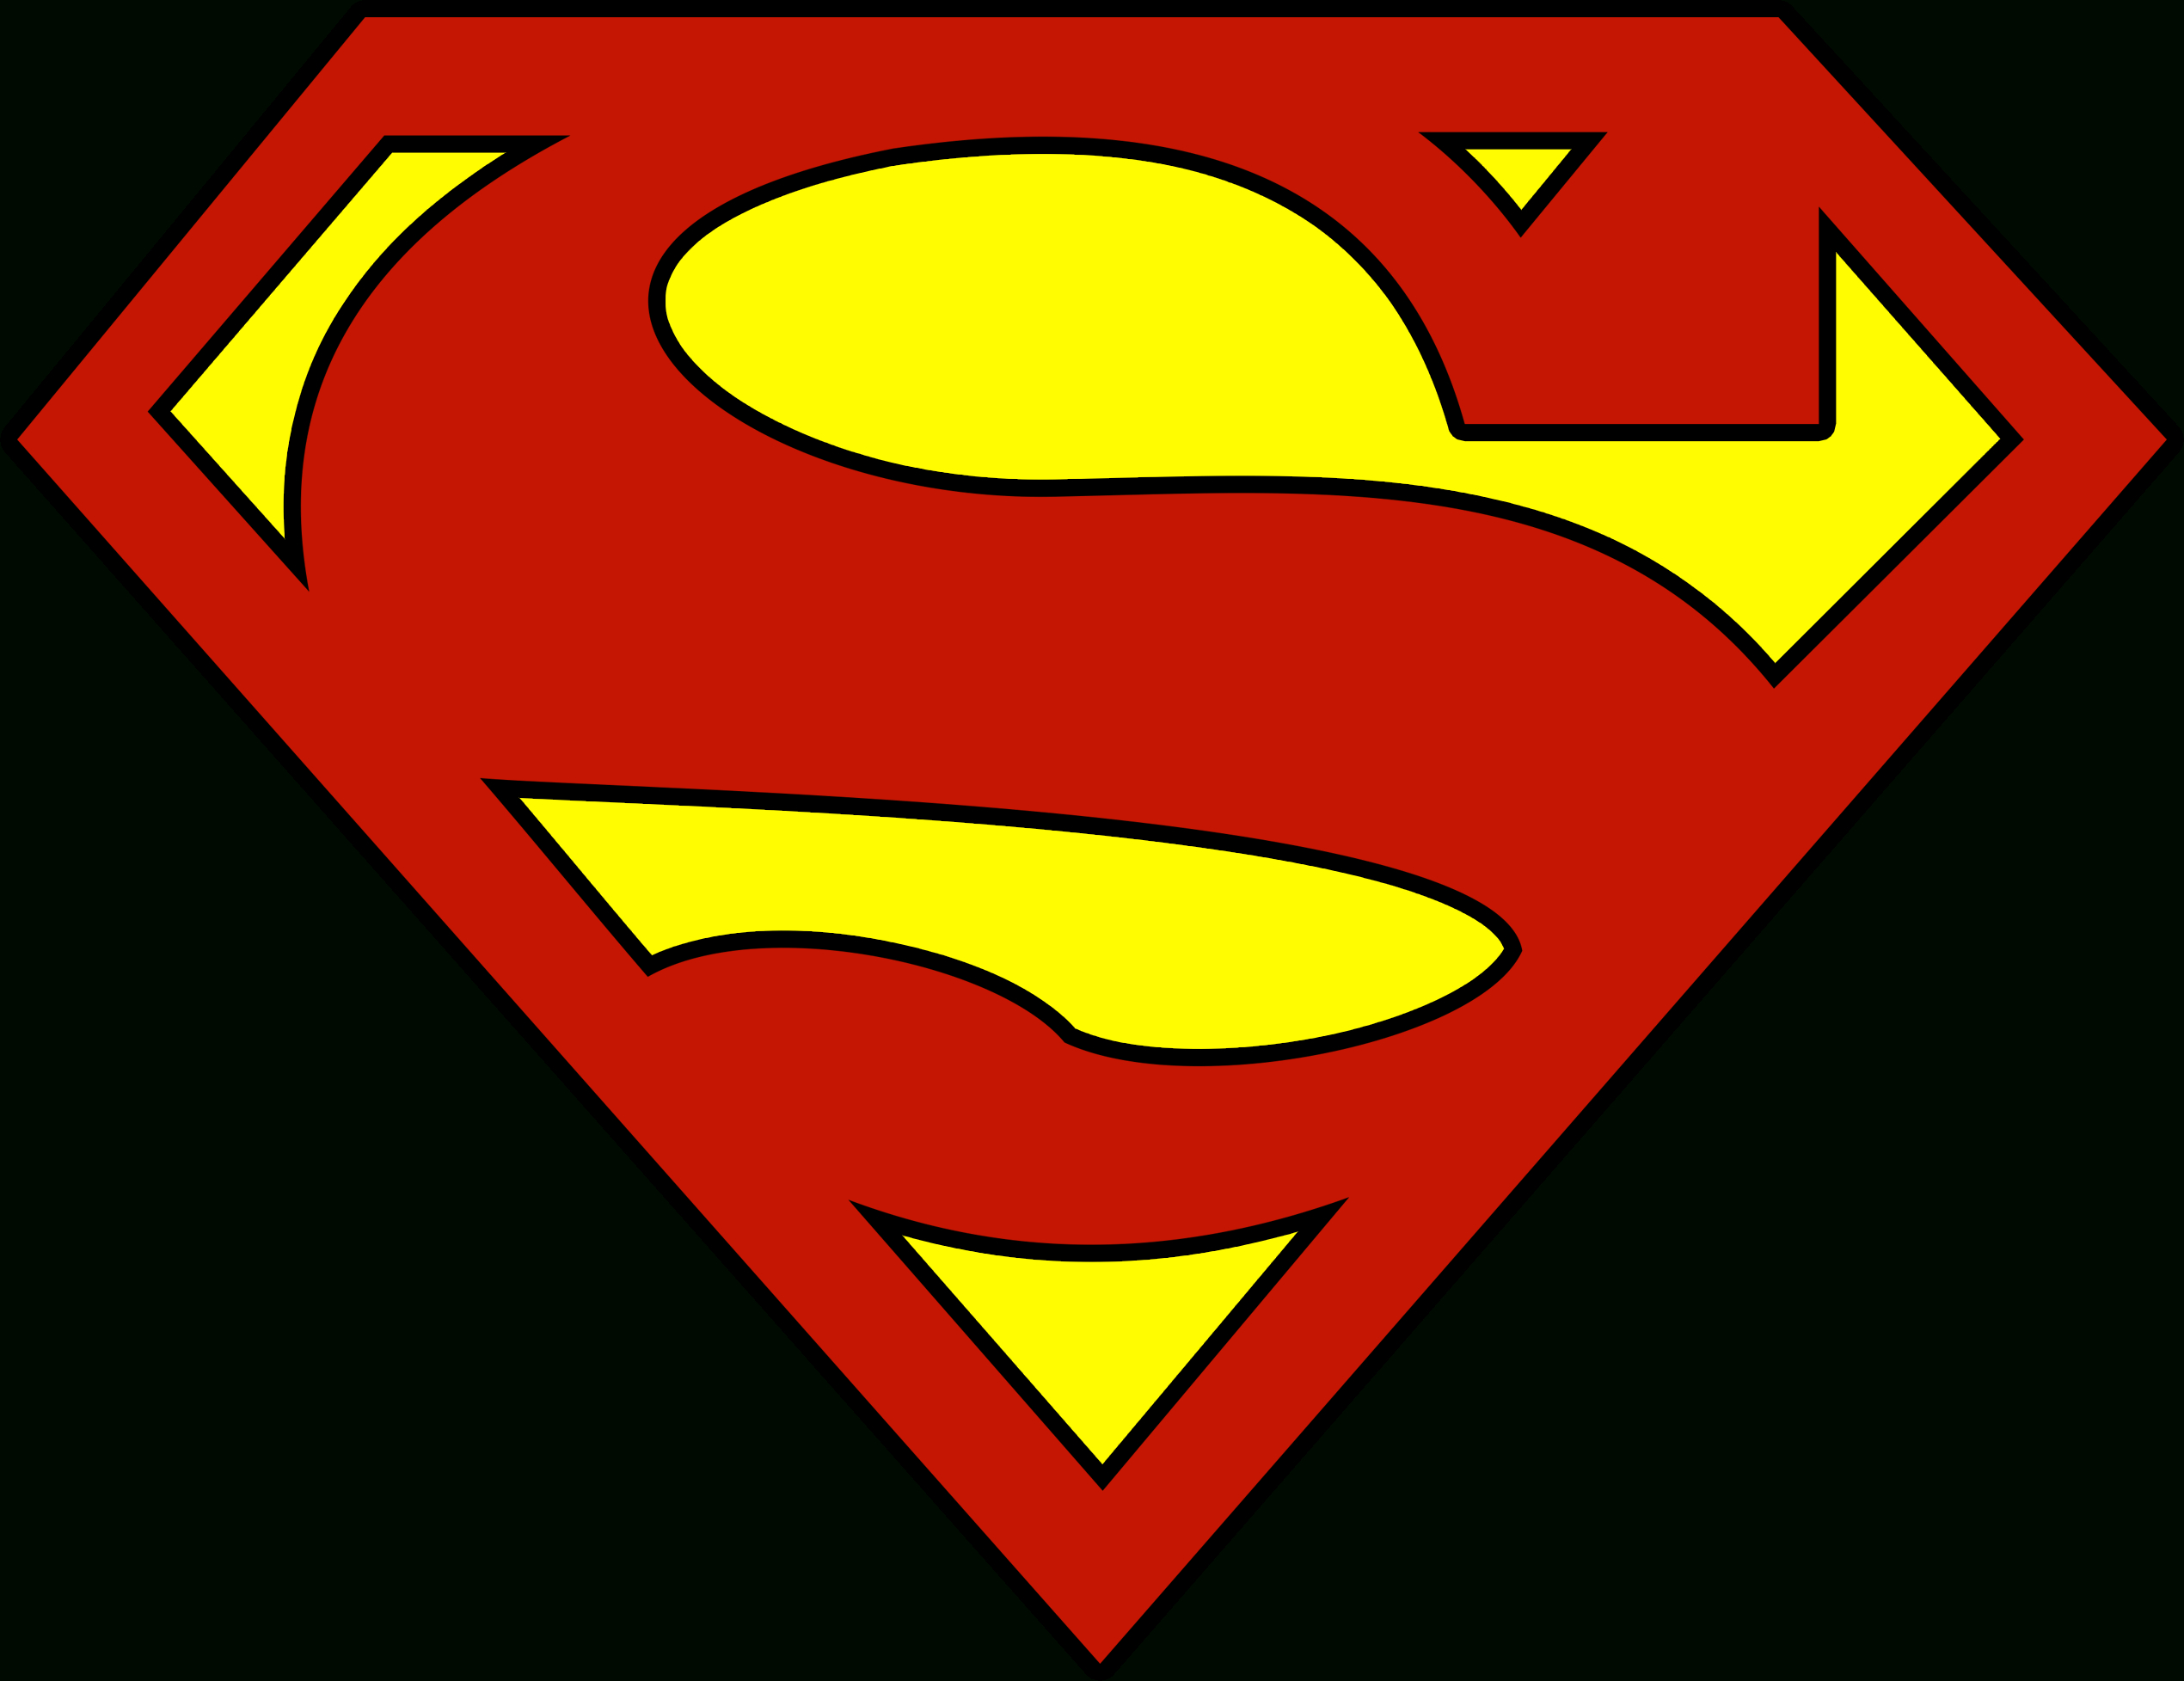 Blank Superman Logos For Blank Superman Logo Template